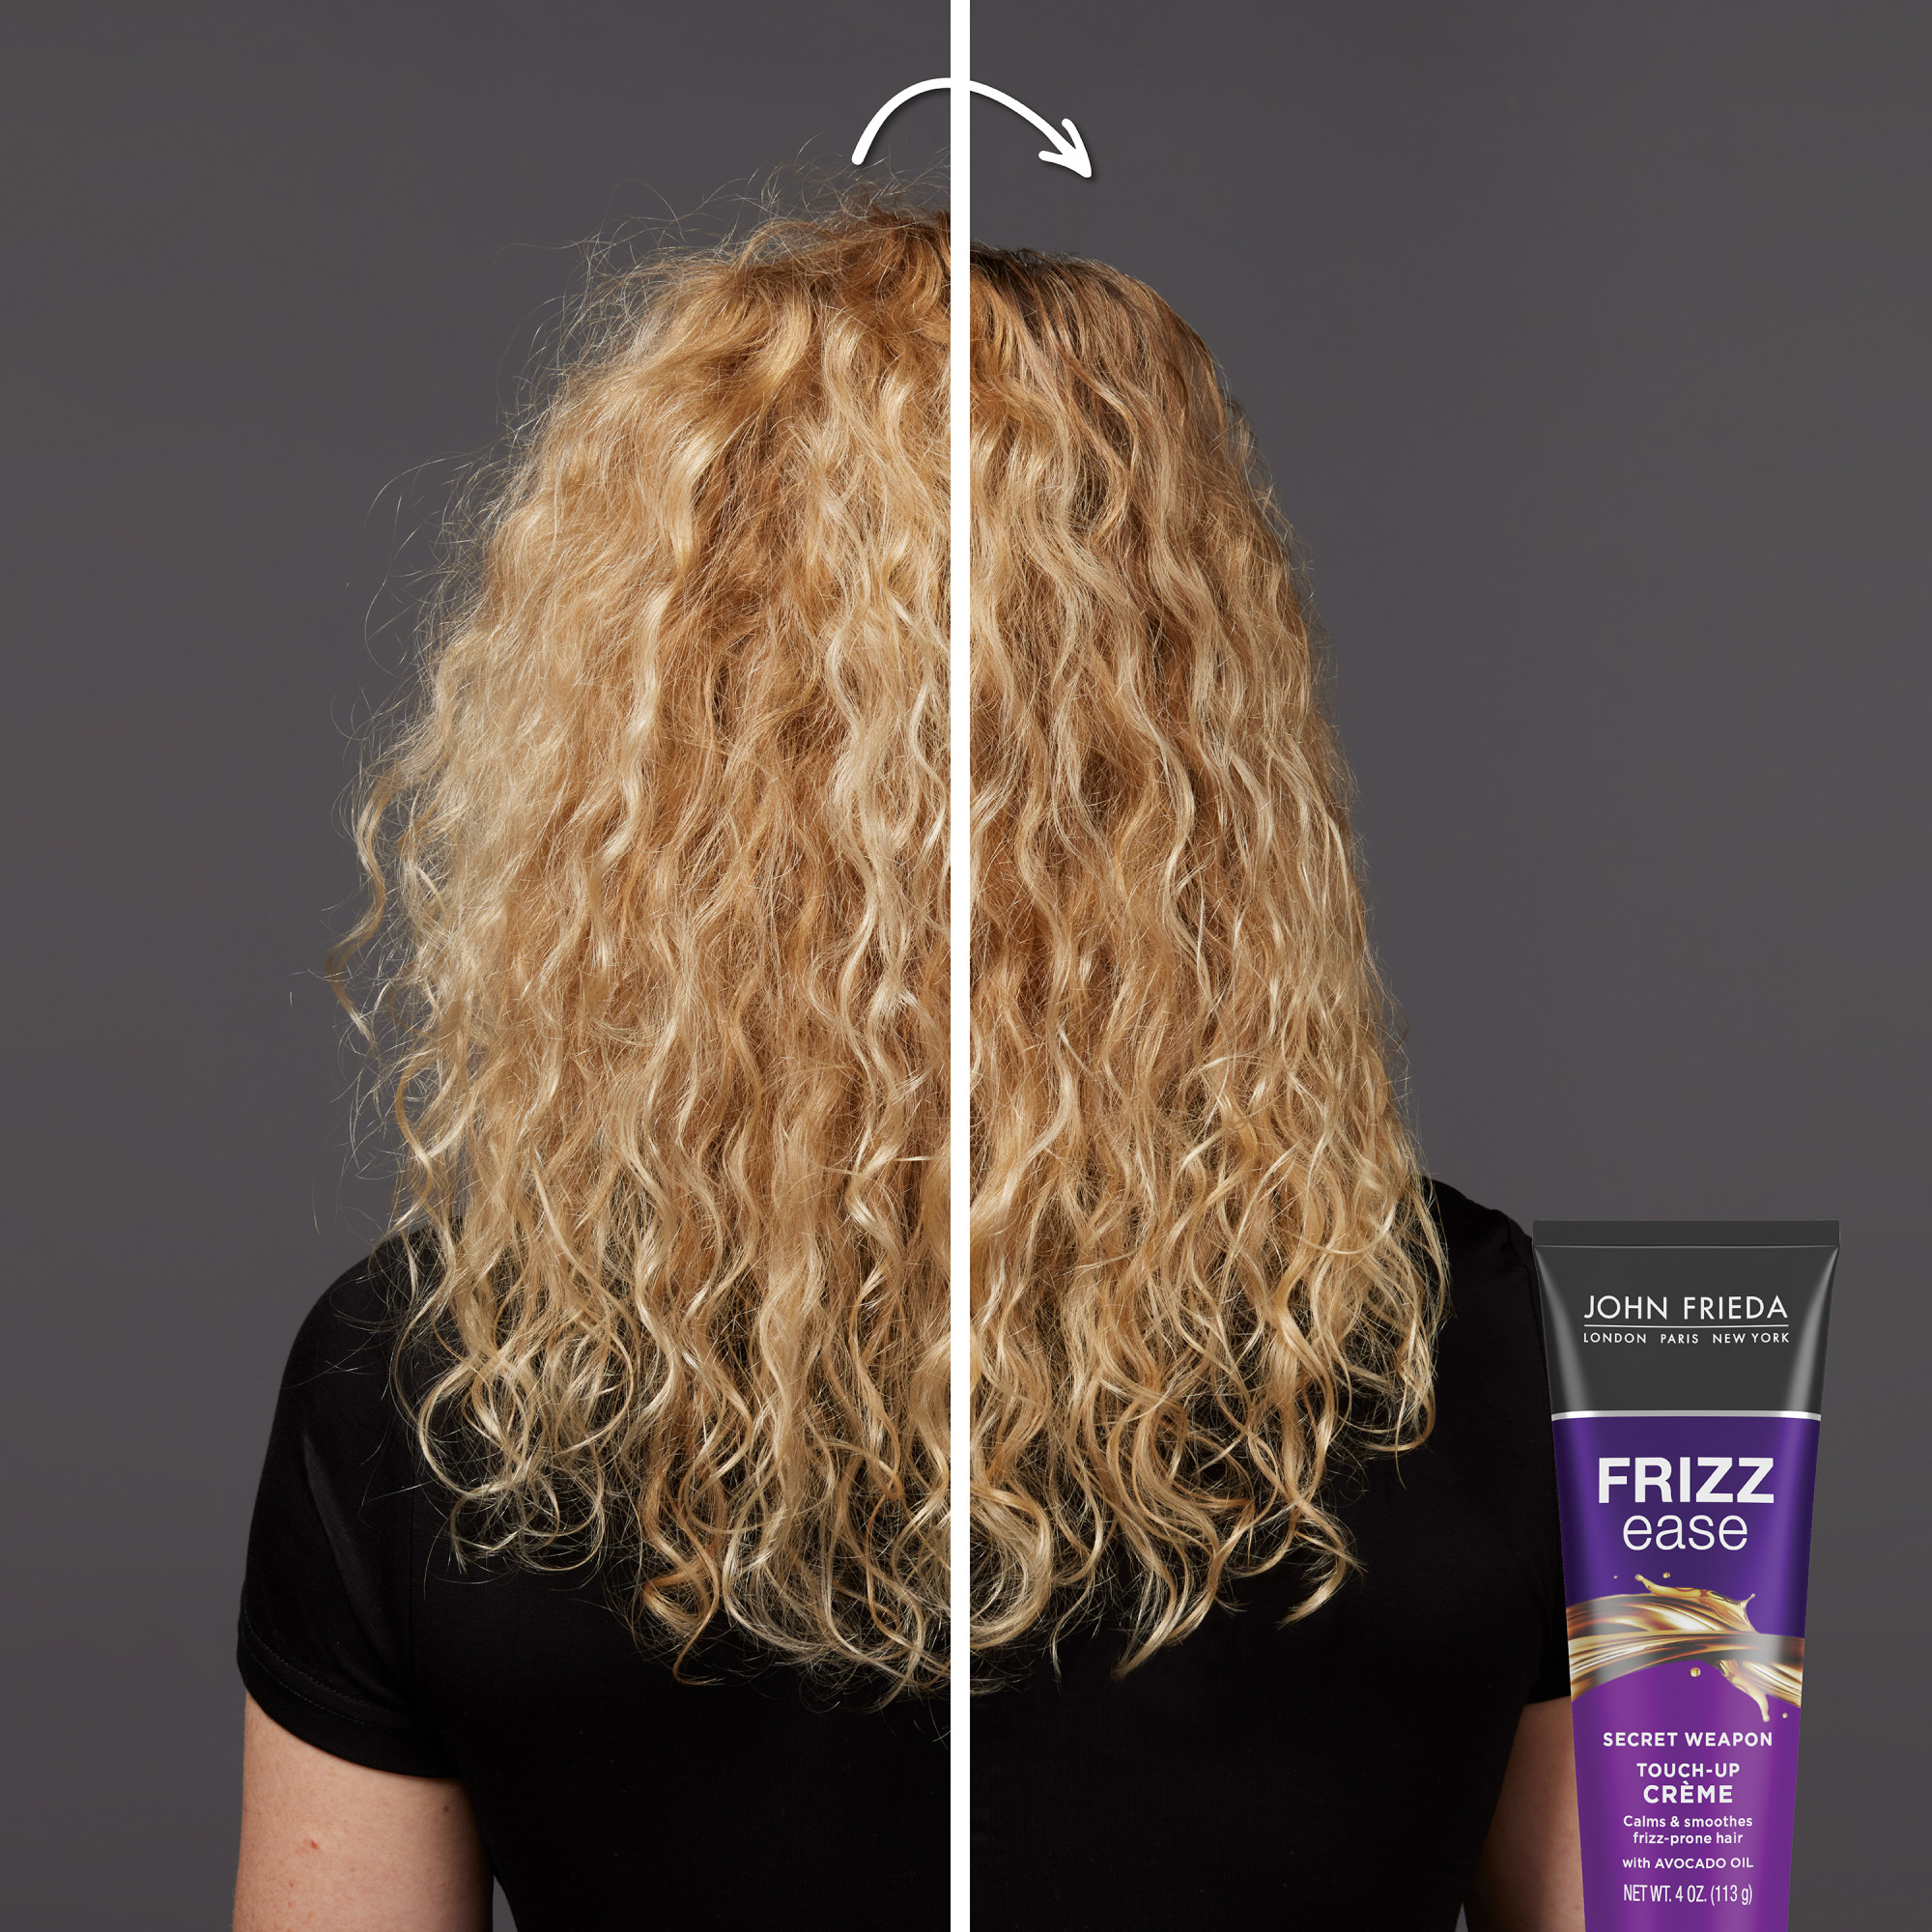 John Frieda Anti Frizz Frizz Ease Secret Weapon Styling Hair Cream For